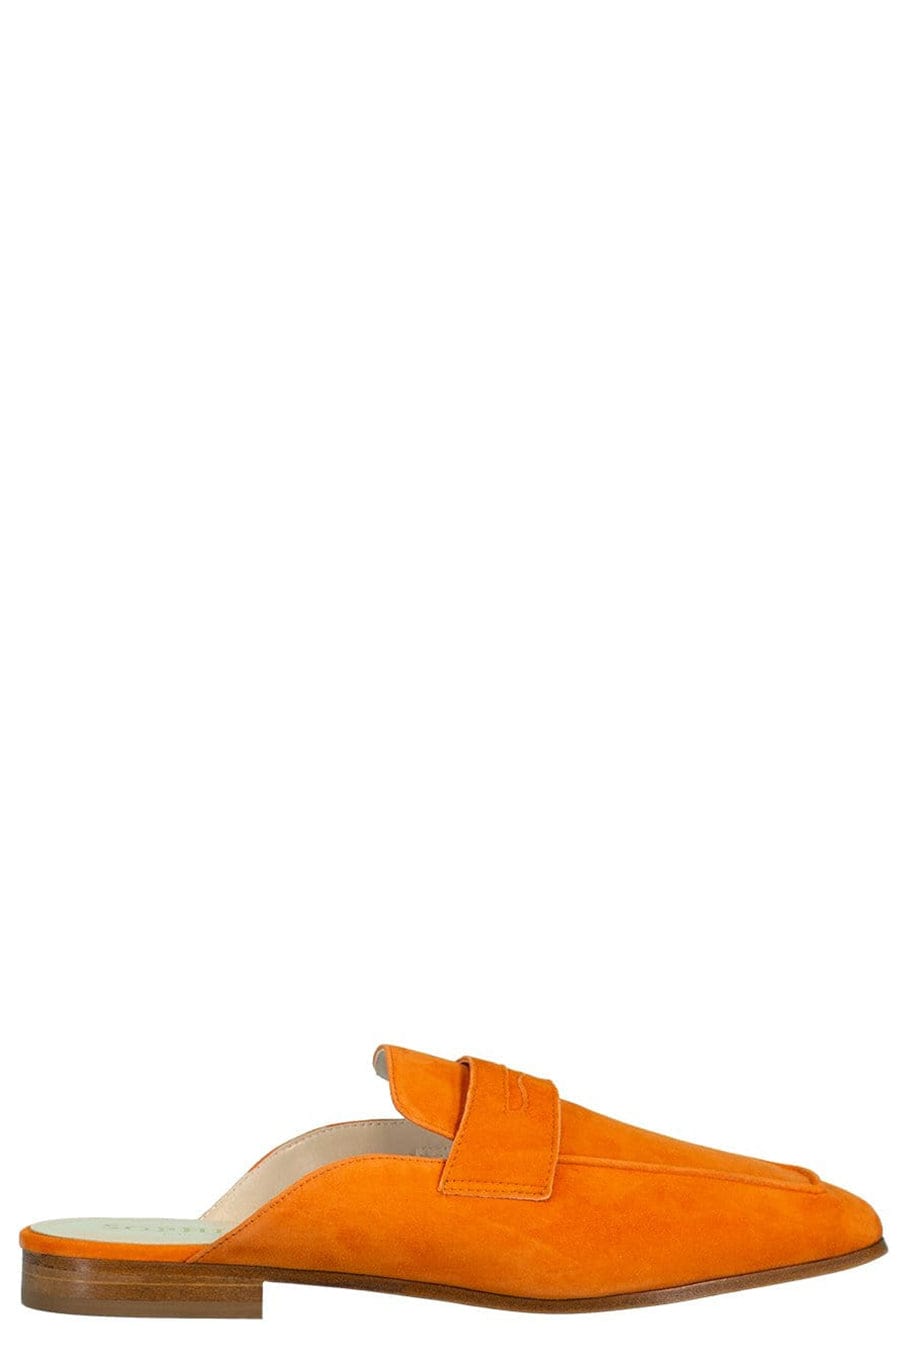 SOPHIQUE-Orange Riviera Suede Leather Mule-